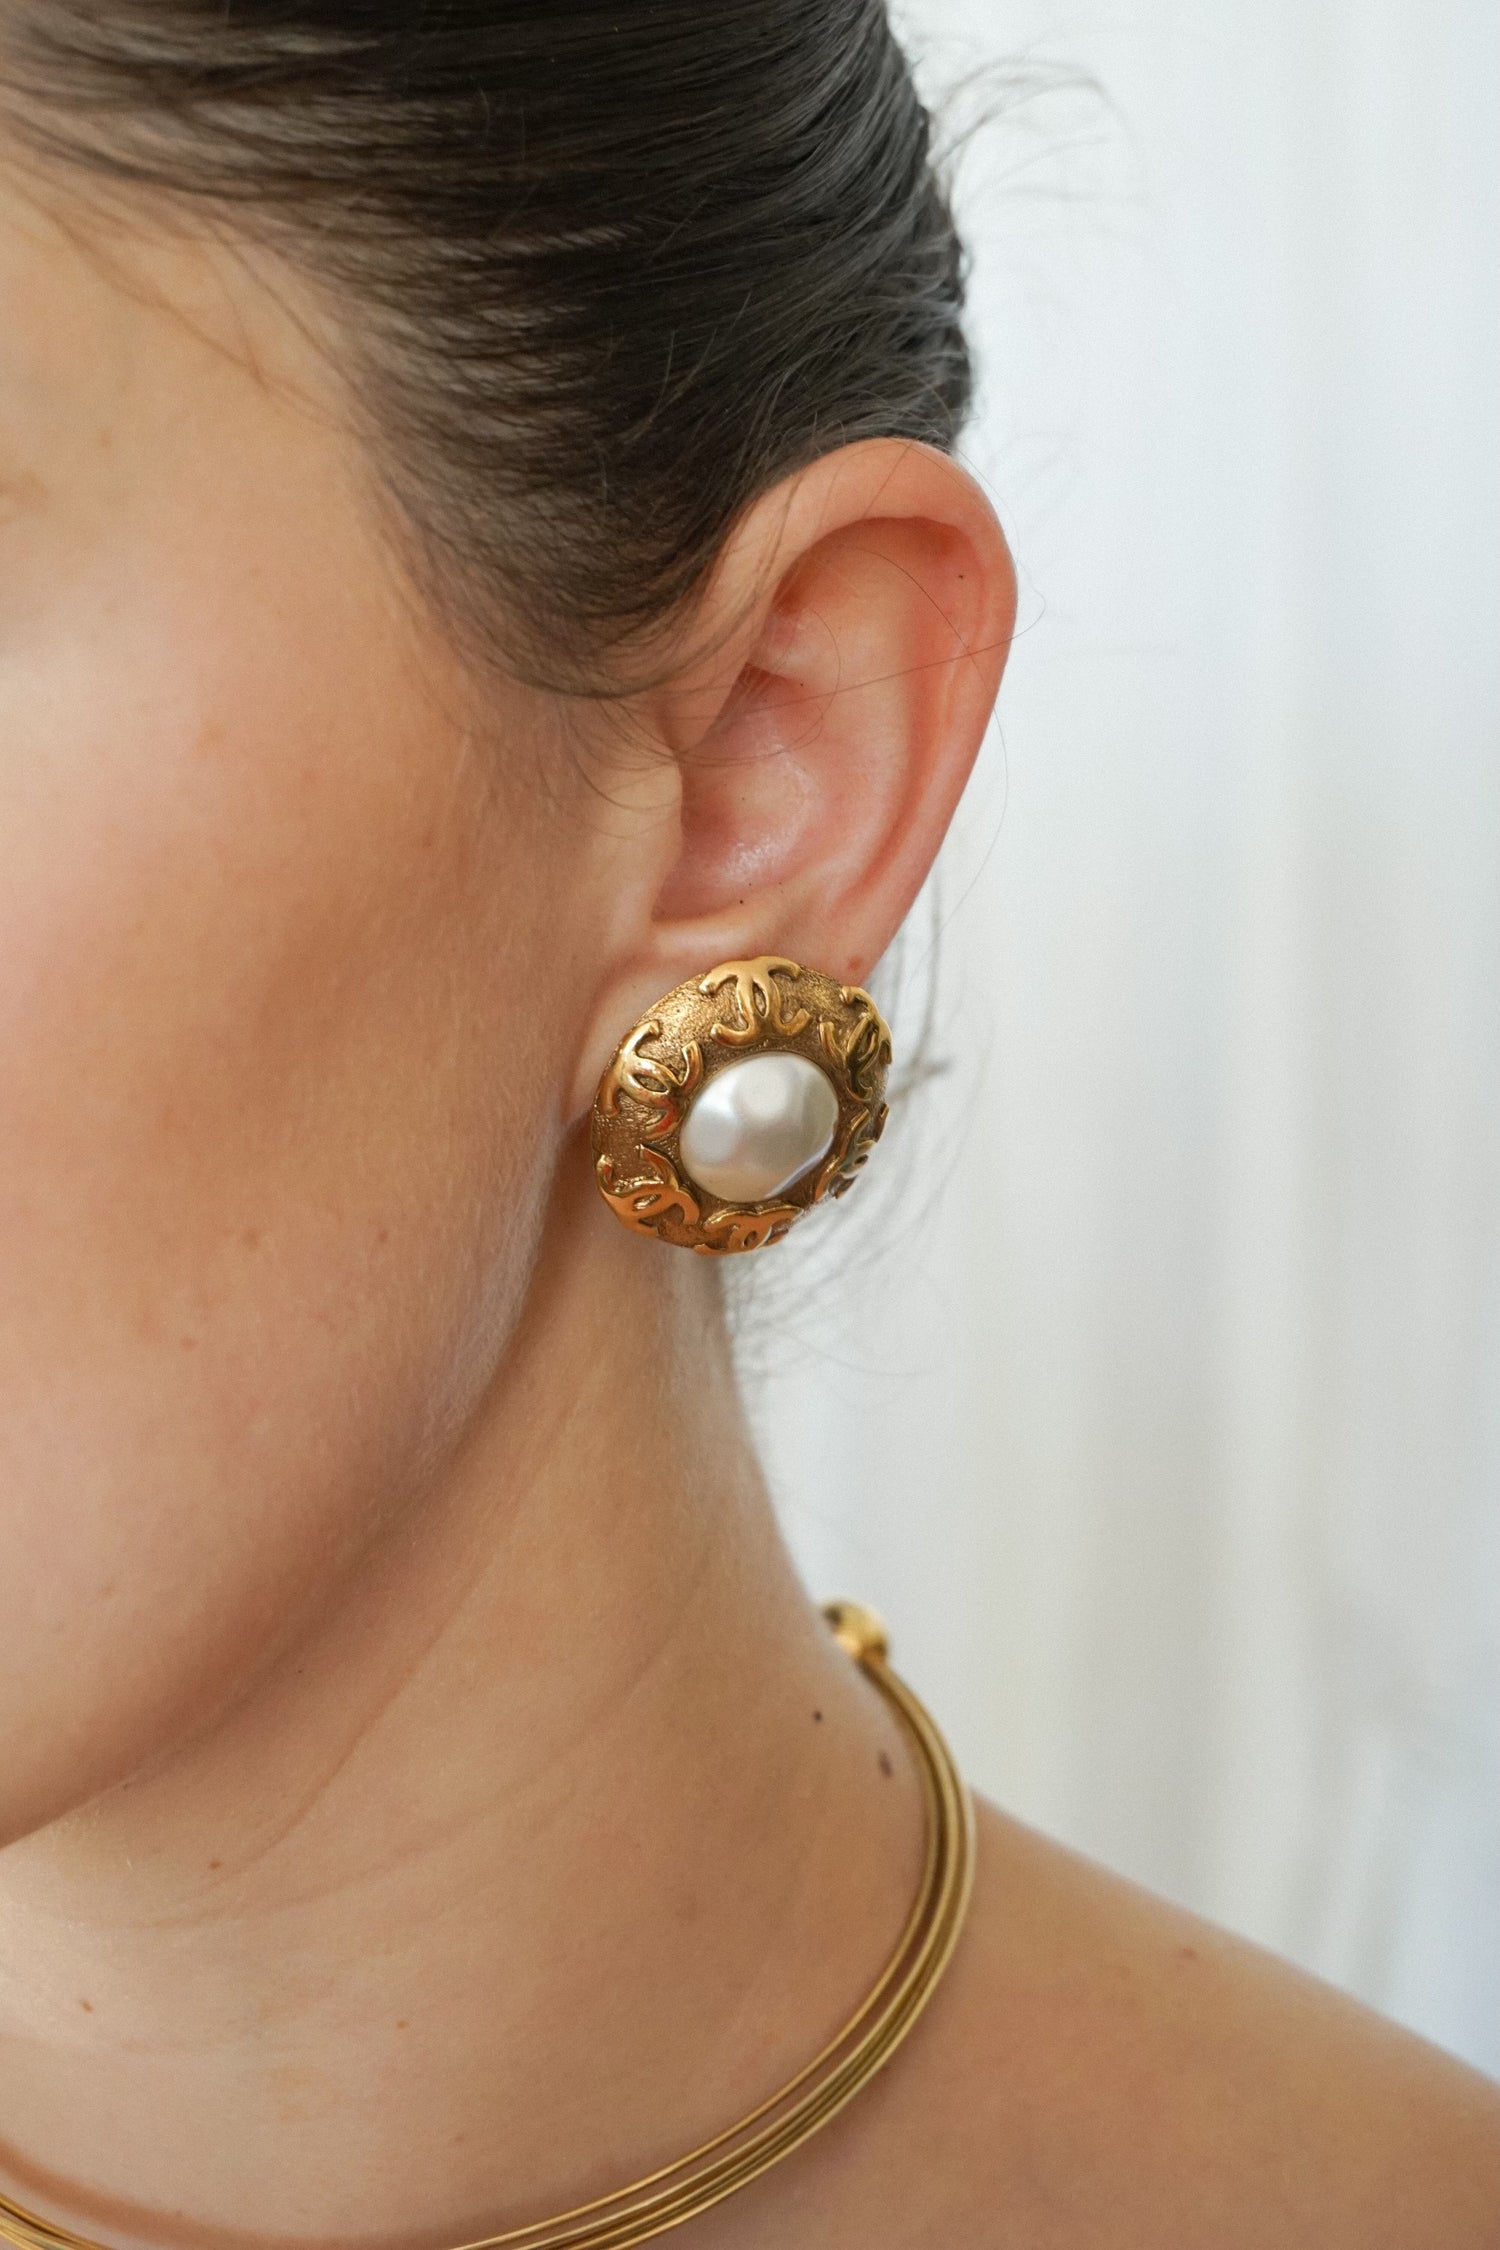 CHANEL vintage earrings